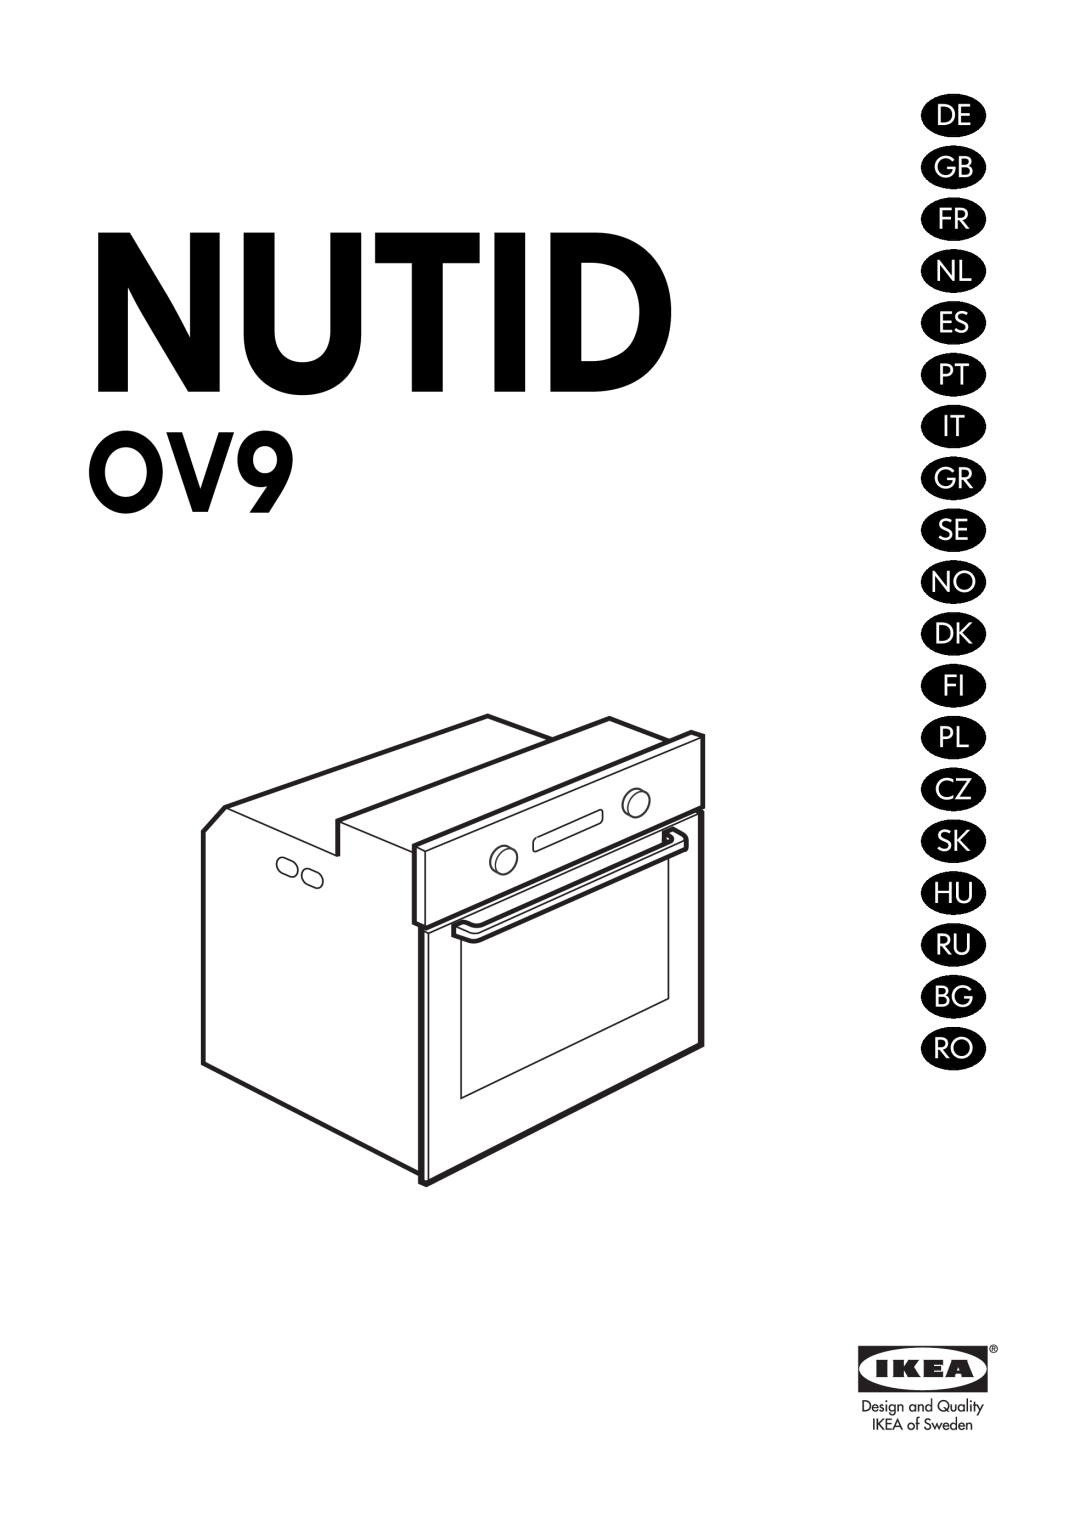 IKEA OV9 manual Nutid, De Gb Fr Nl Es Pt It Gr Se No Dk Fi Pl Cz Sk Hu, Ru Bg Ro 